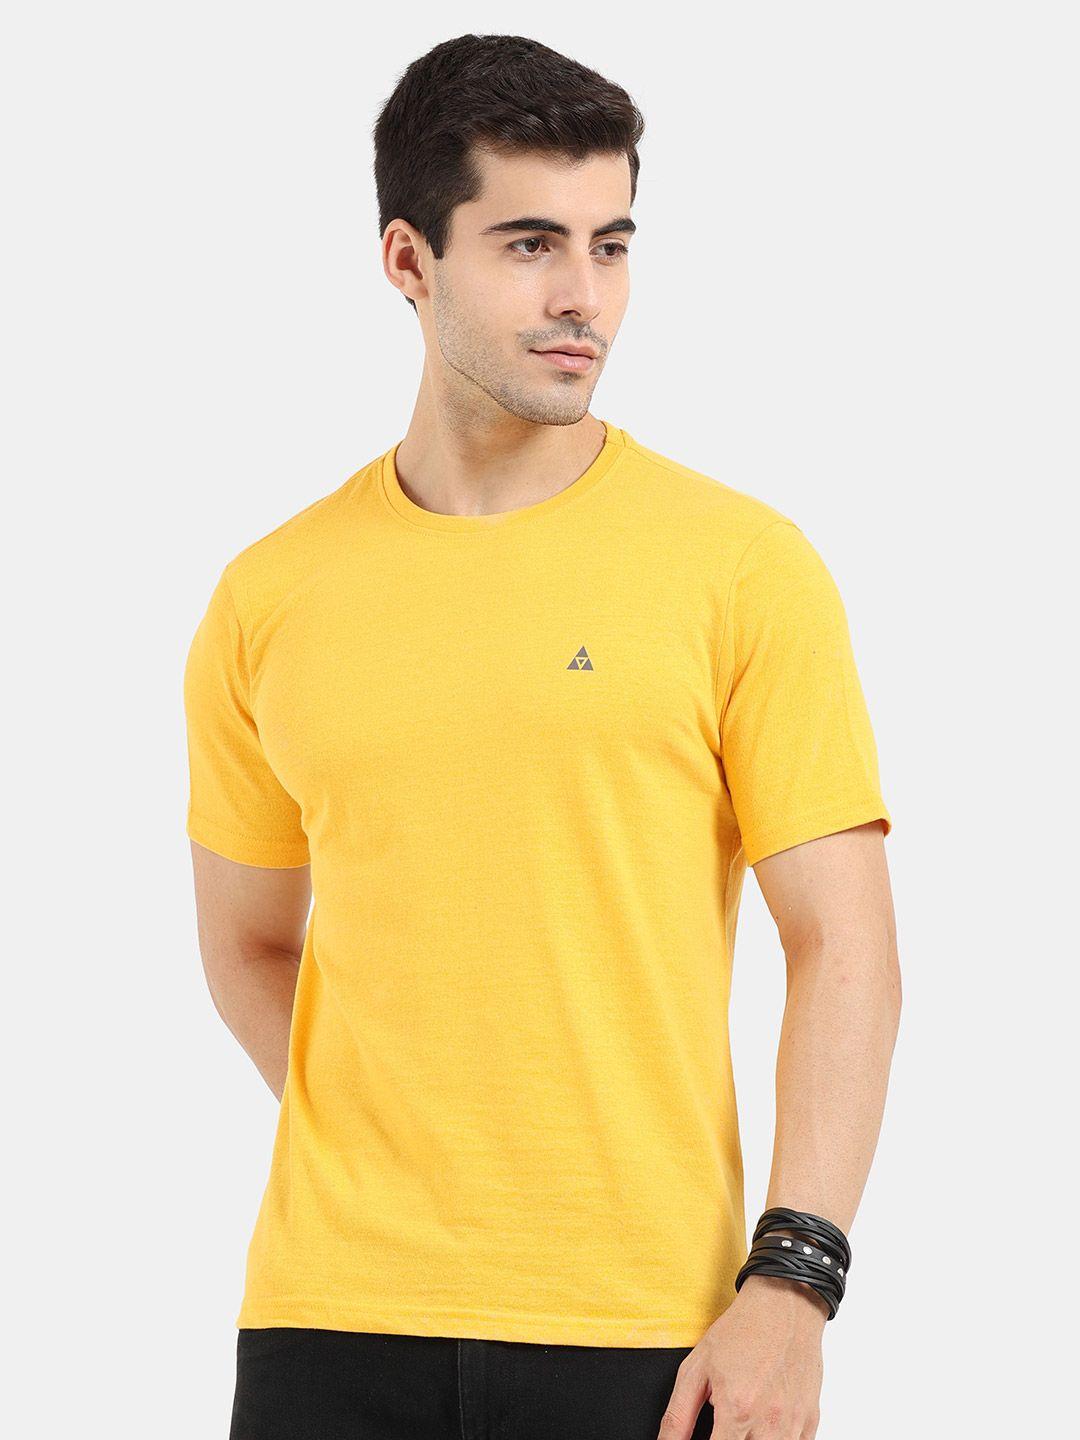 ardeur men yellow cotton slim fit t-shirt